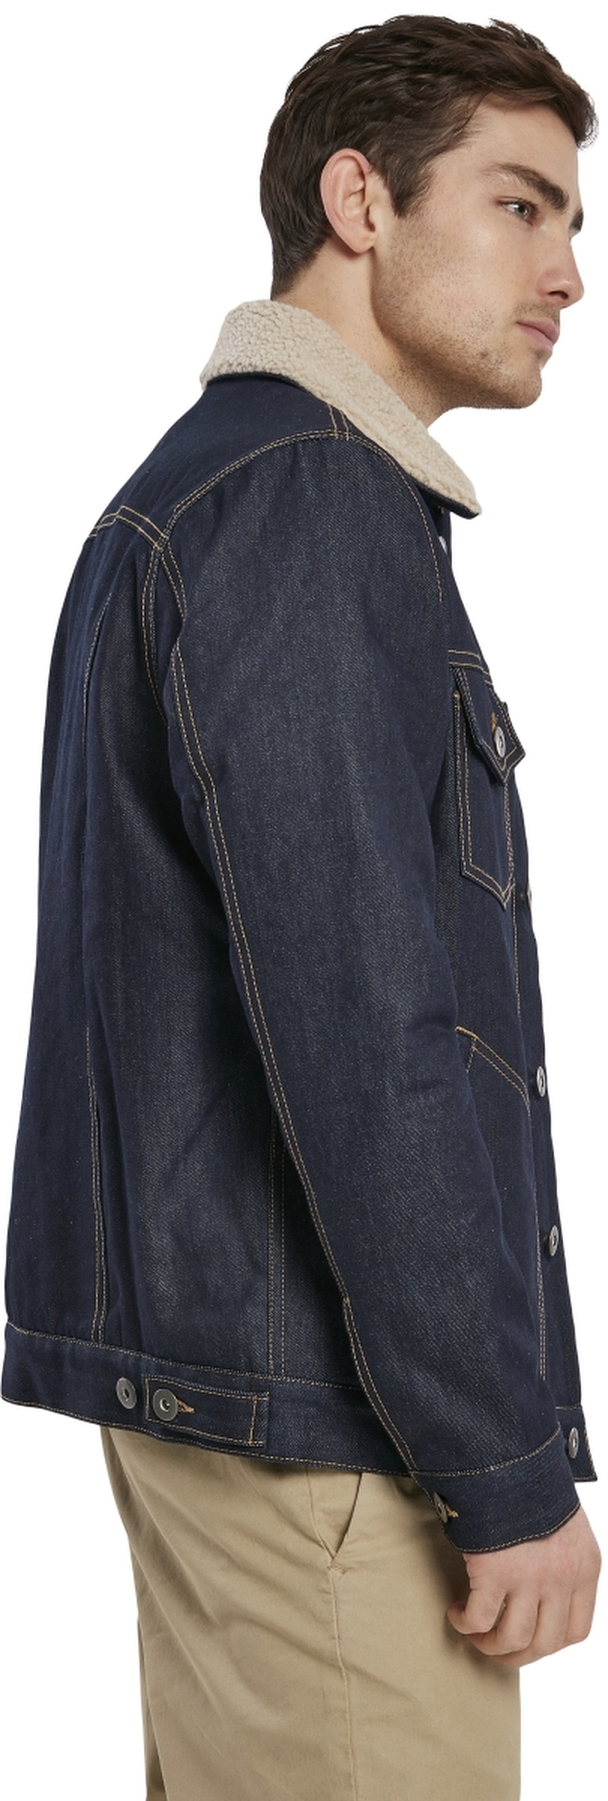 Urban Classics Herren Sherpa Lined Jeans Jacket